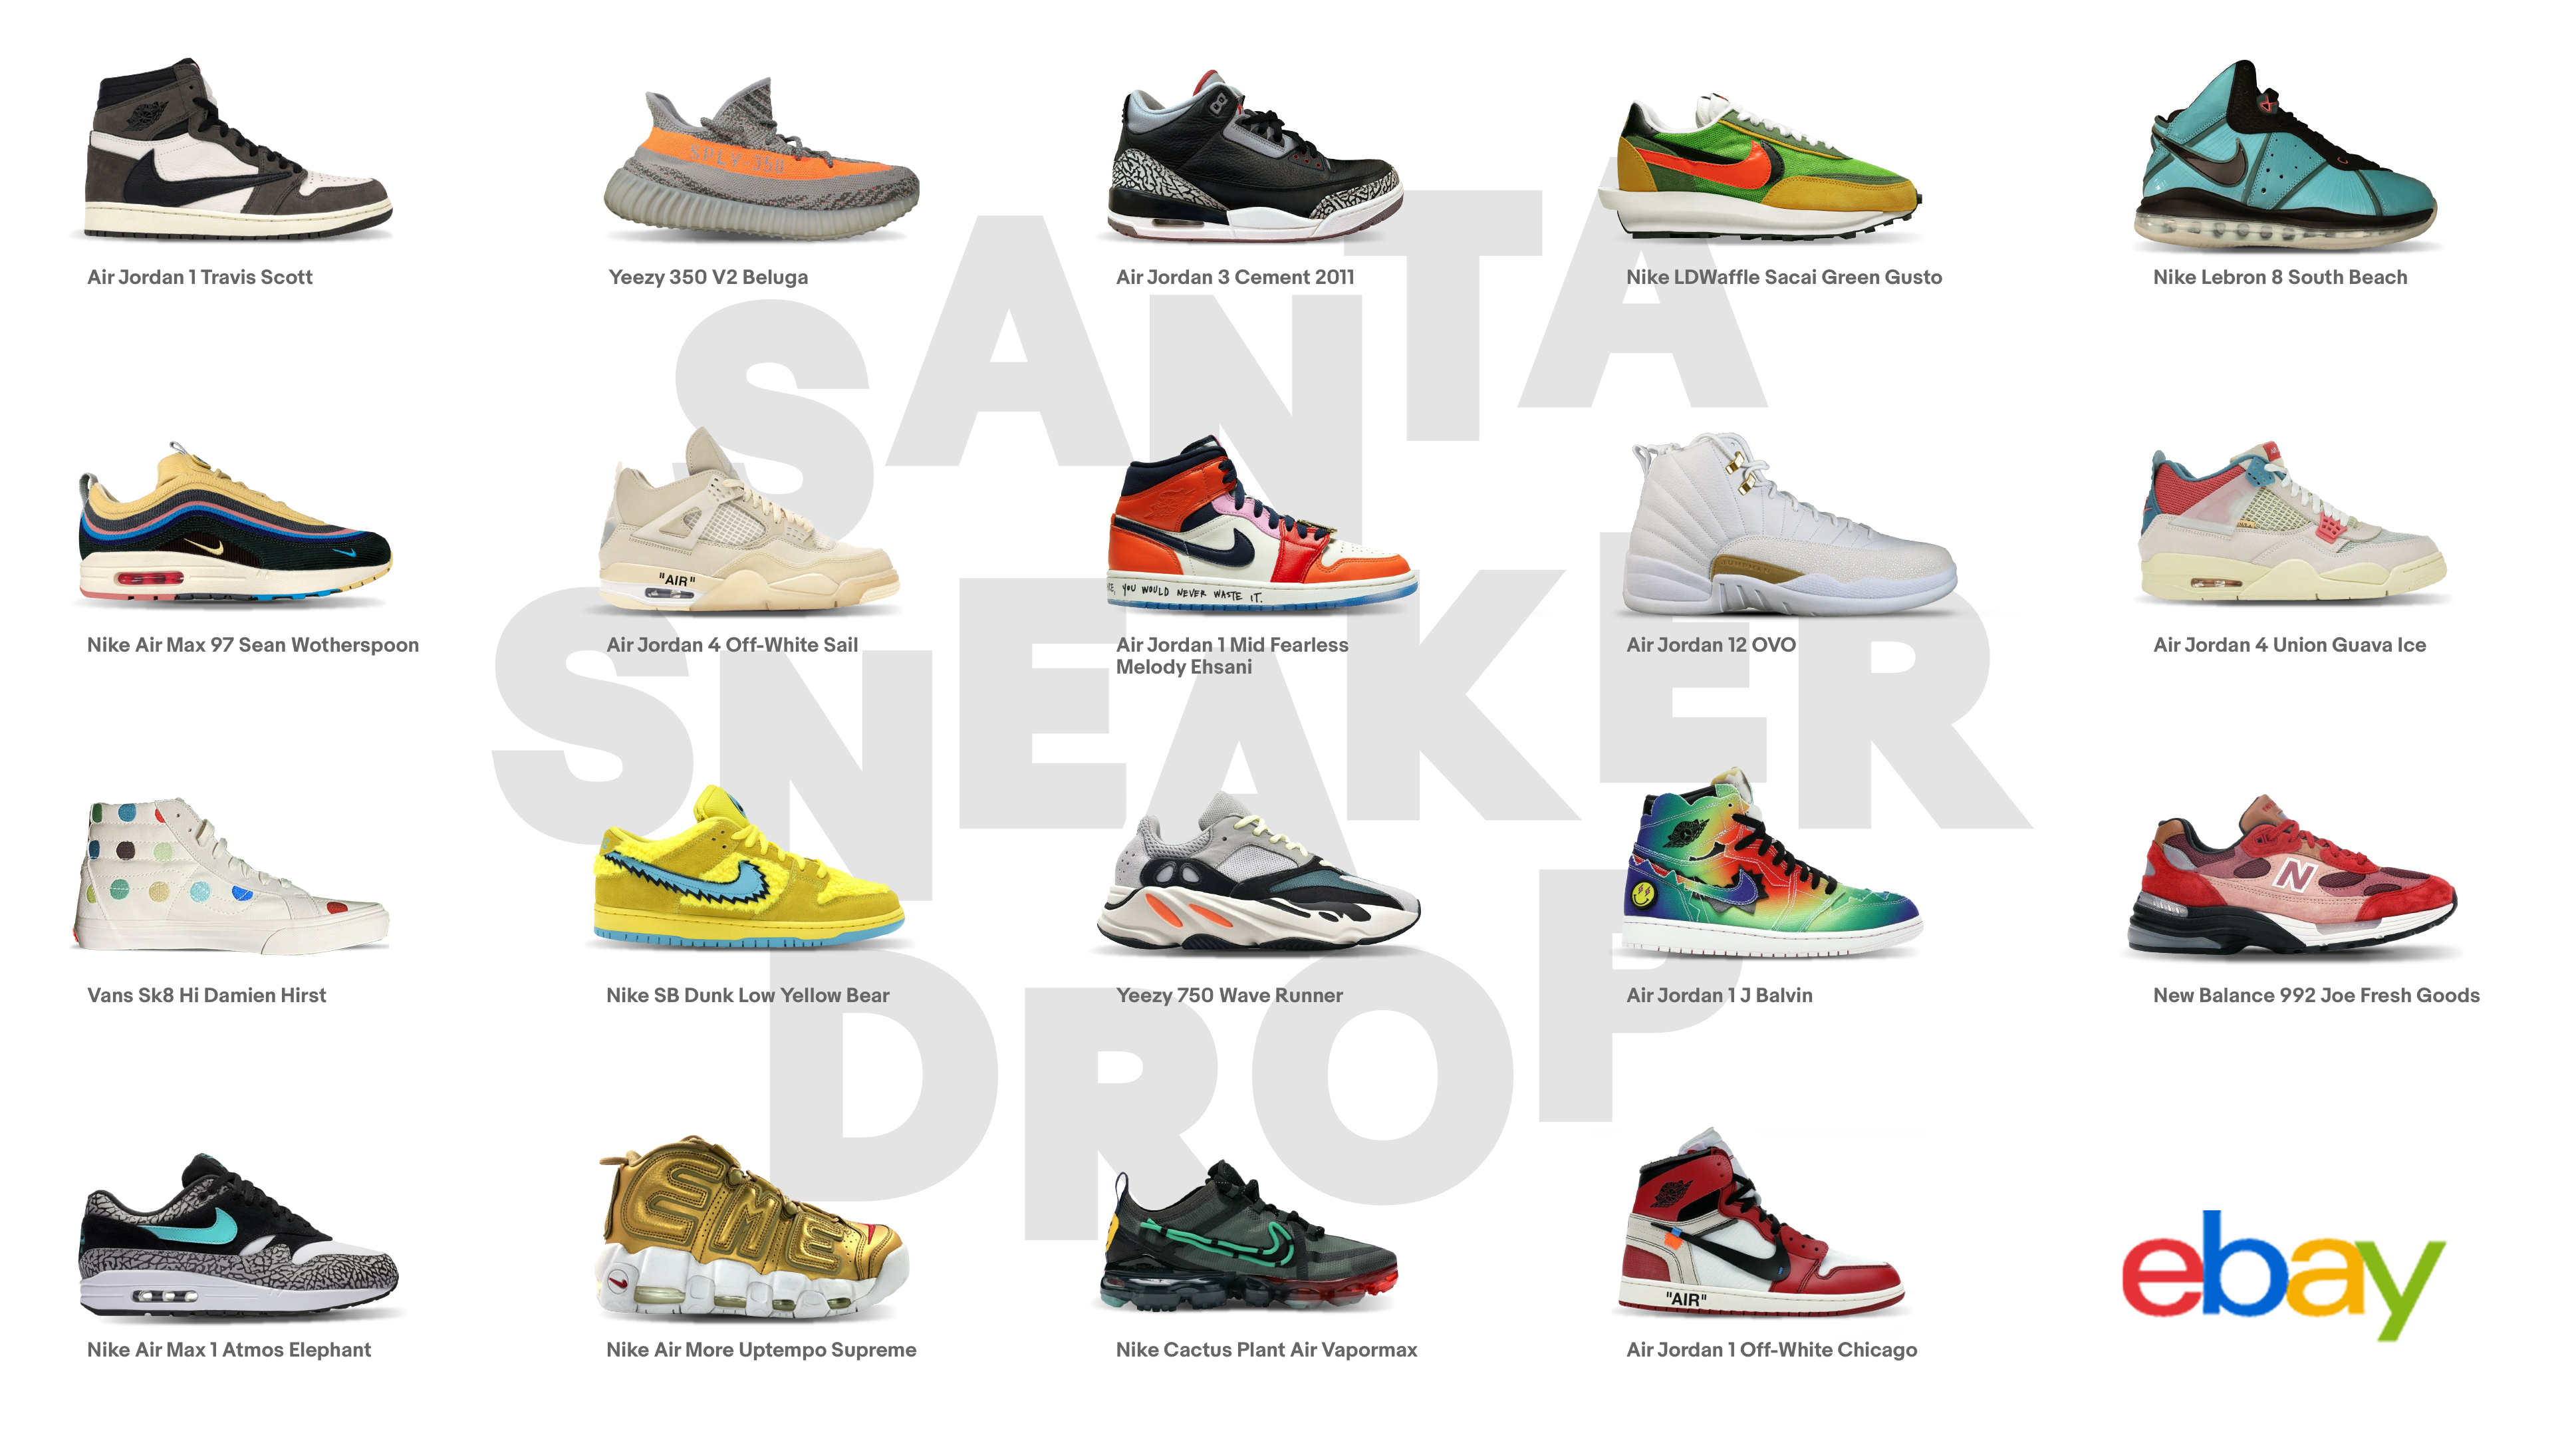 eBay “Santa Sneaker Drop"